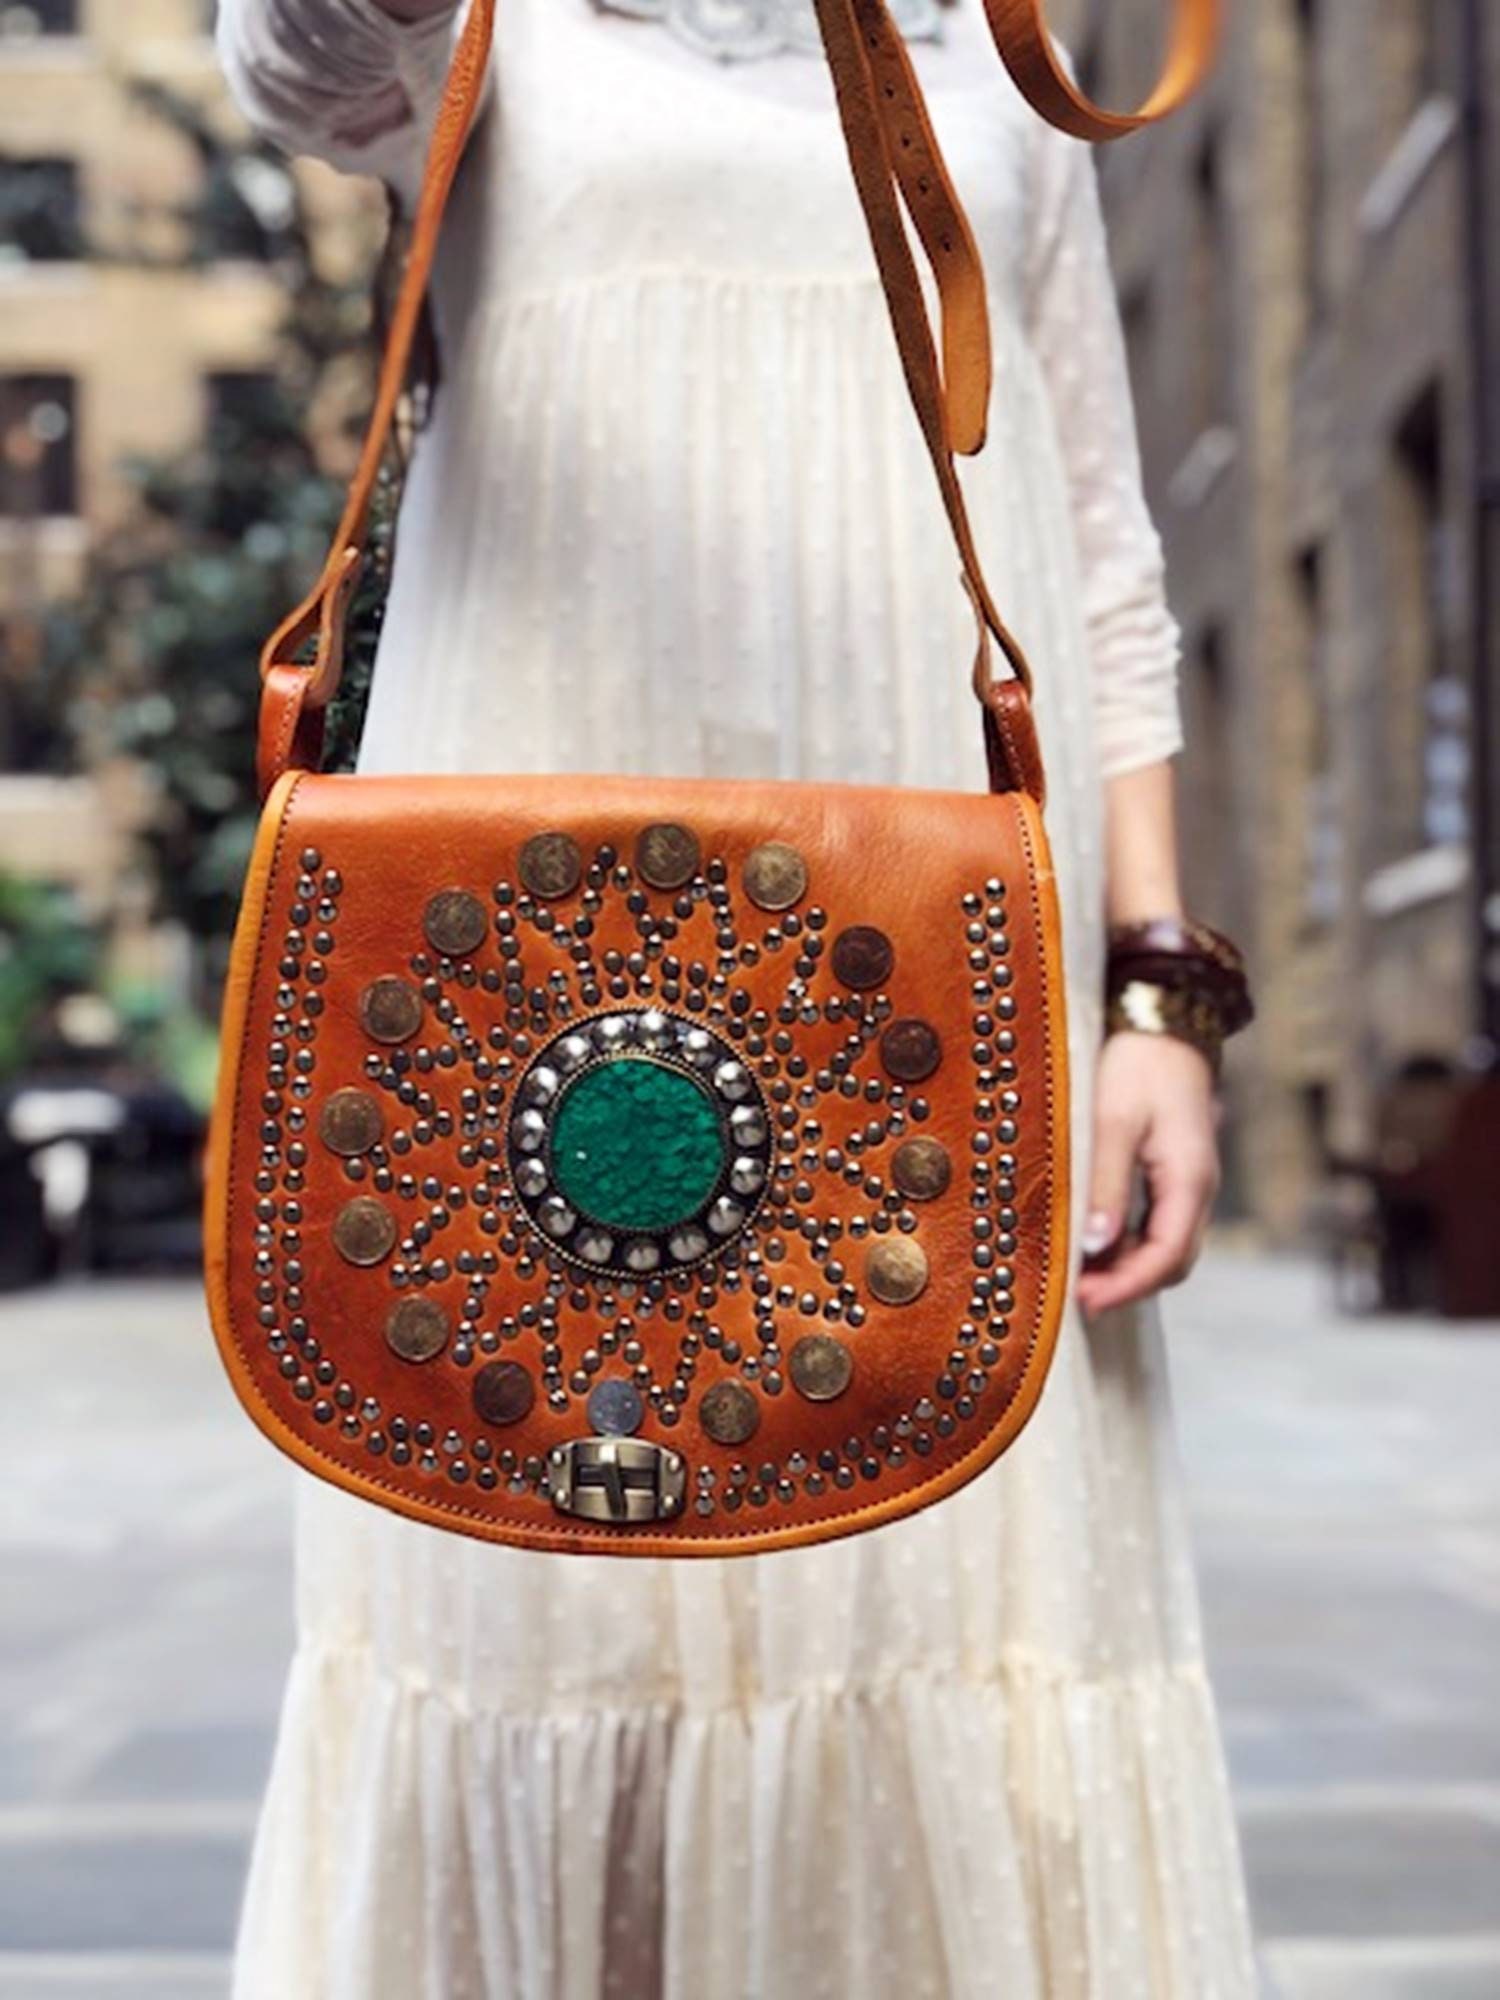 Boho Chic by New Vintage Handbags